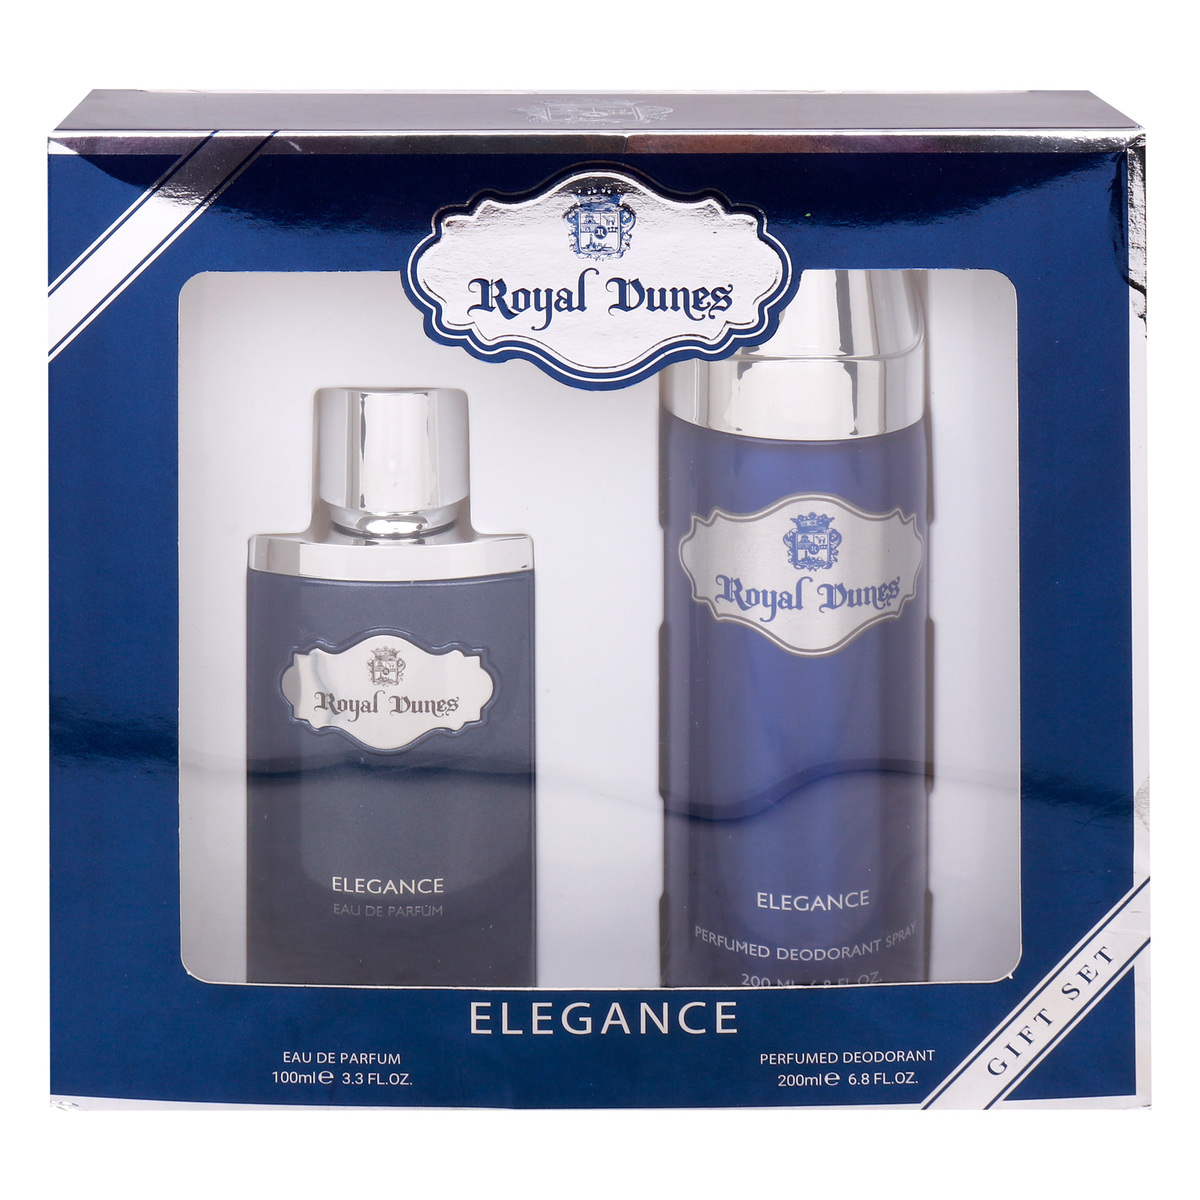 Royal Dunes EDP Elegance for Men 100 ml + Perfumed Deodorant Spray 200 ml